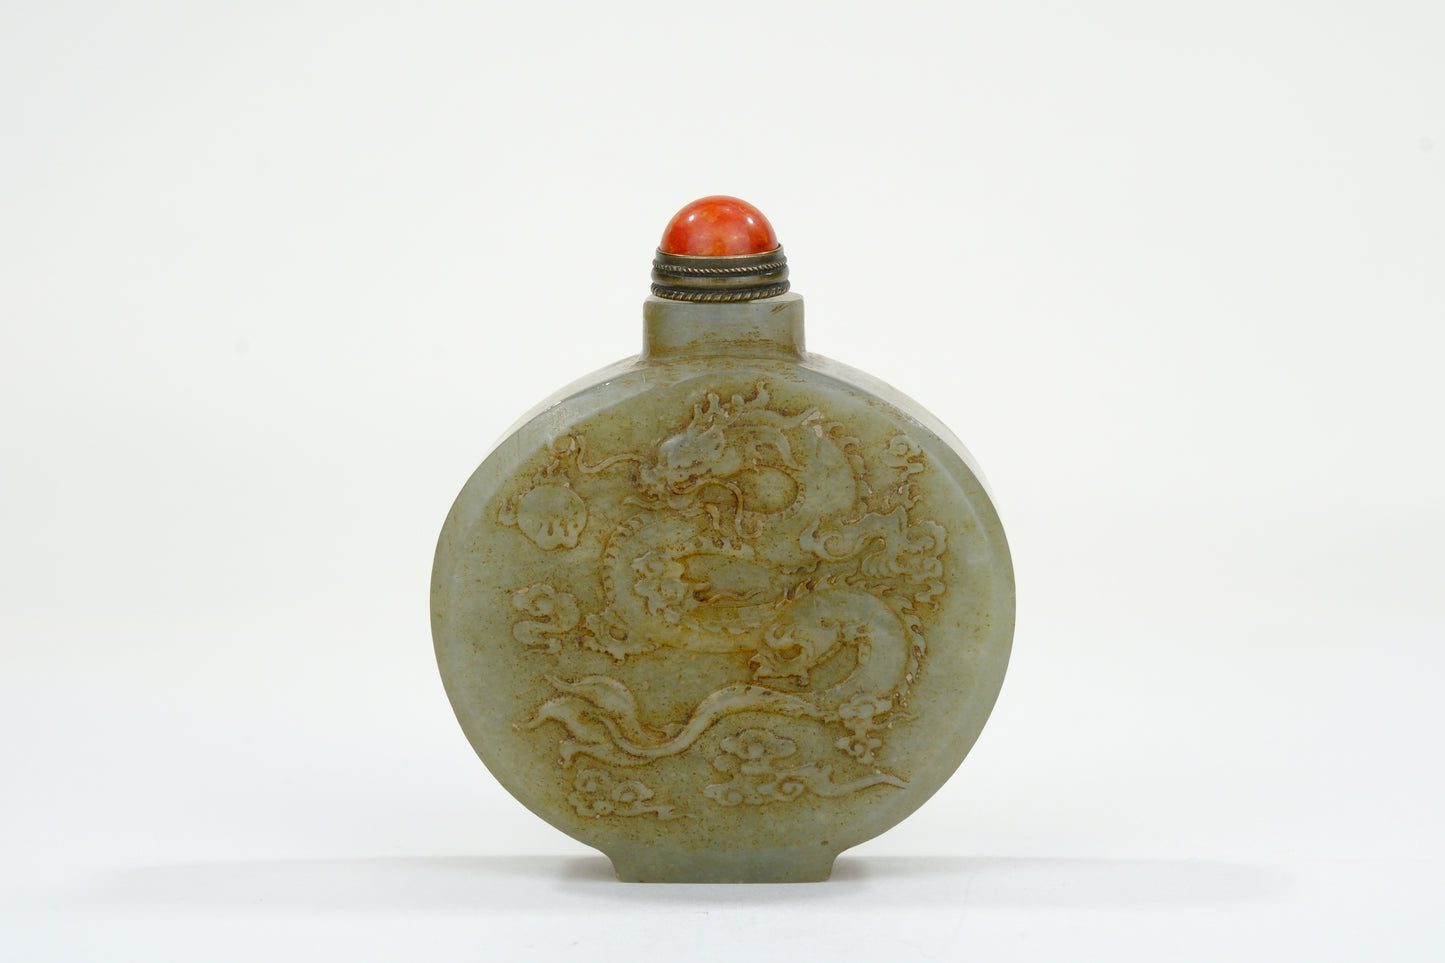 Vintage Chinese Natural Stone Snuff Bottle Dragon Motif 2.5"